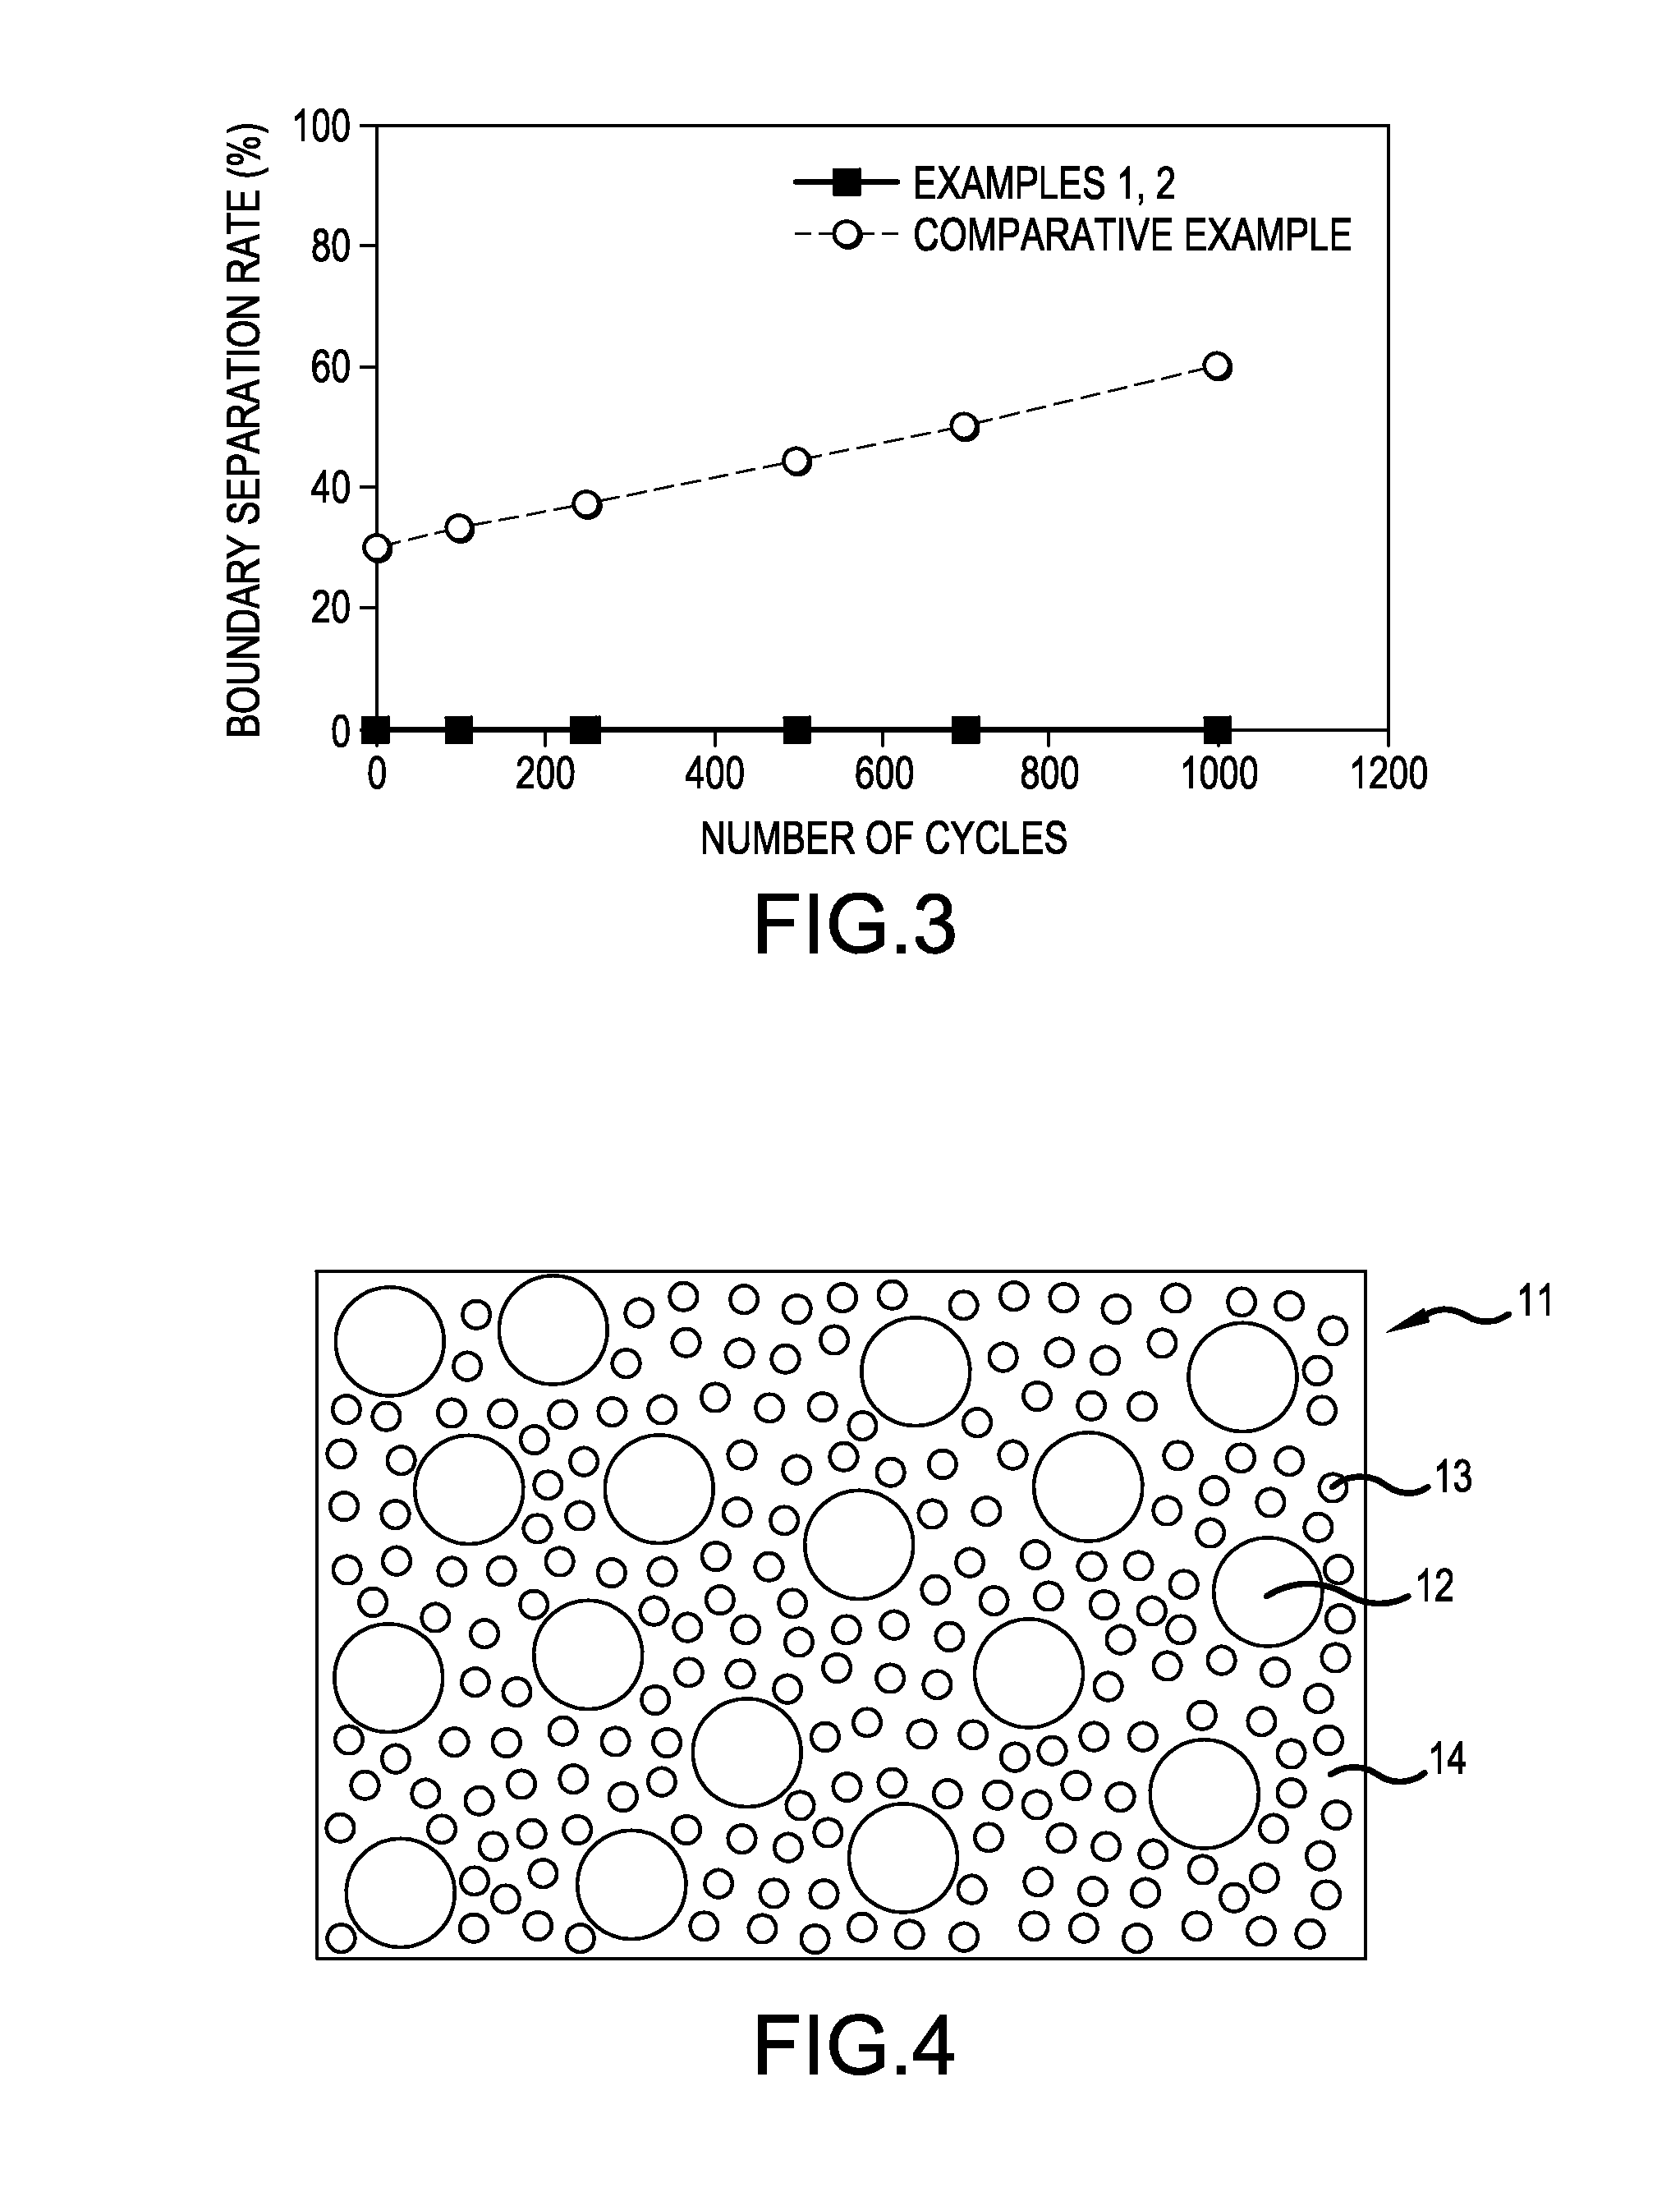 Nanocomposite resin composition